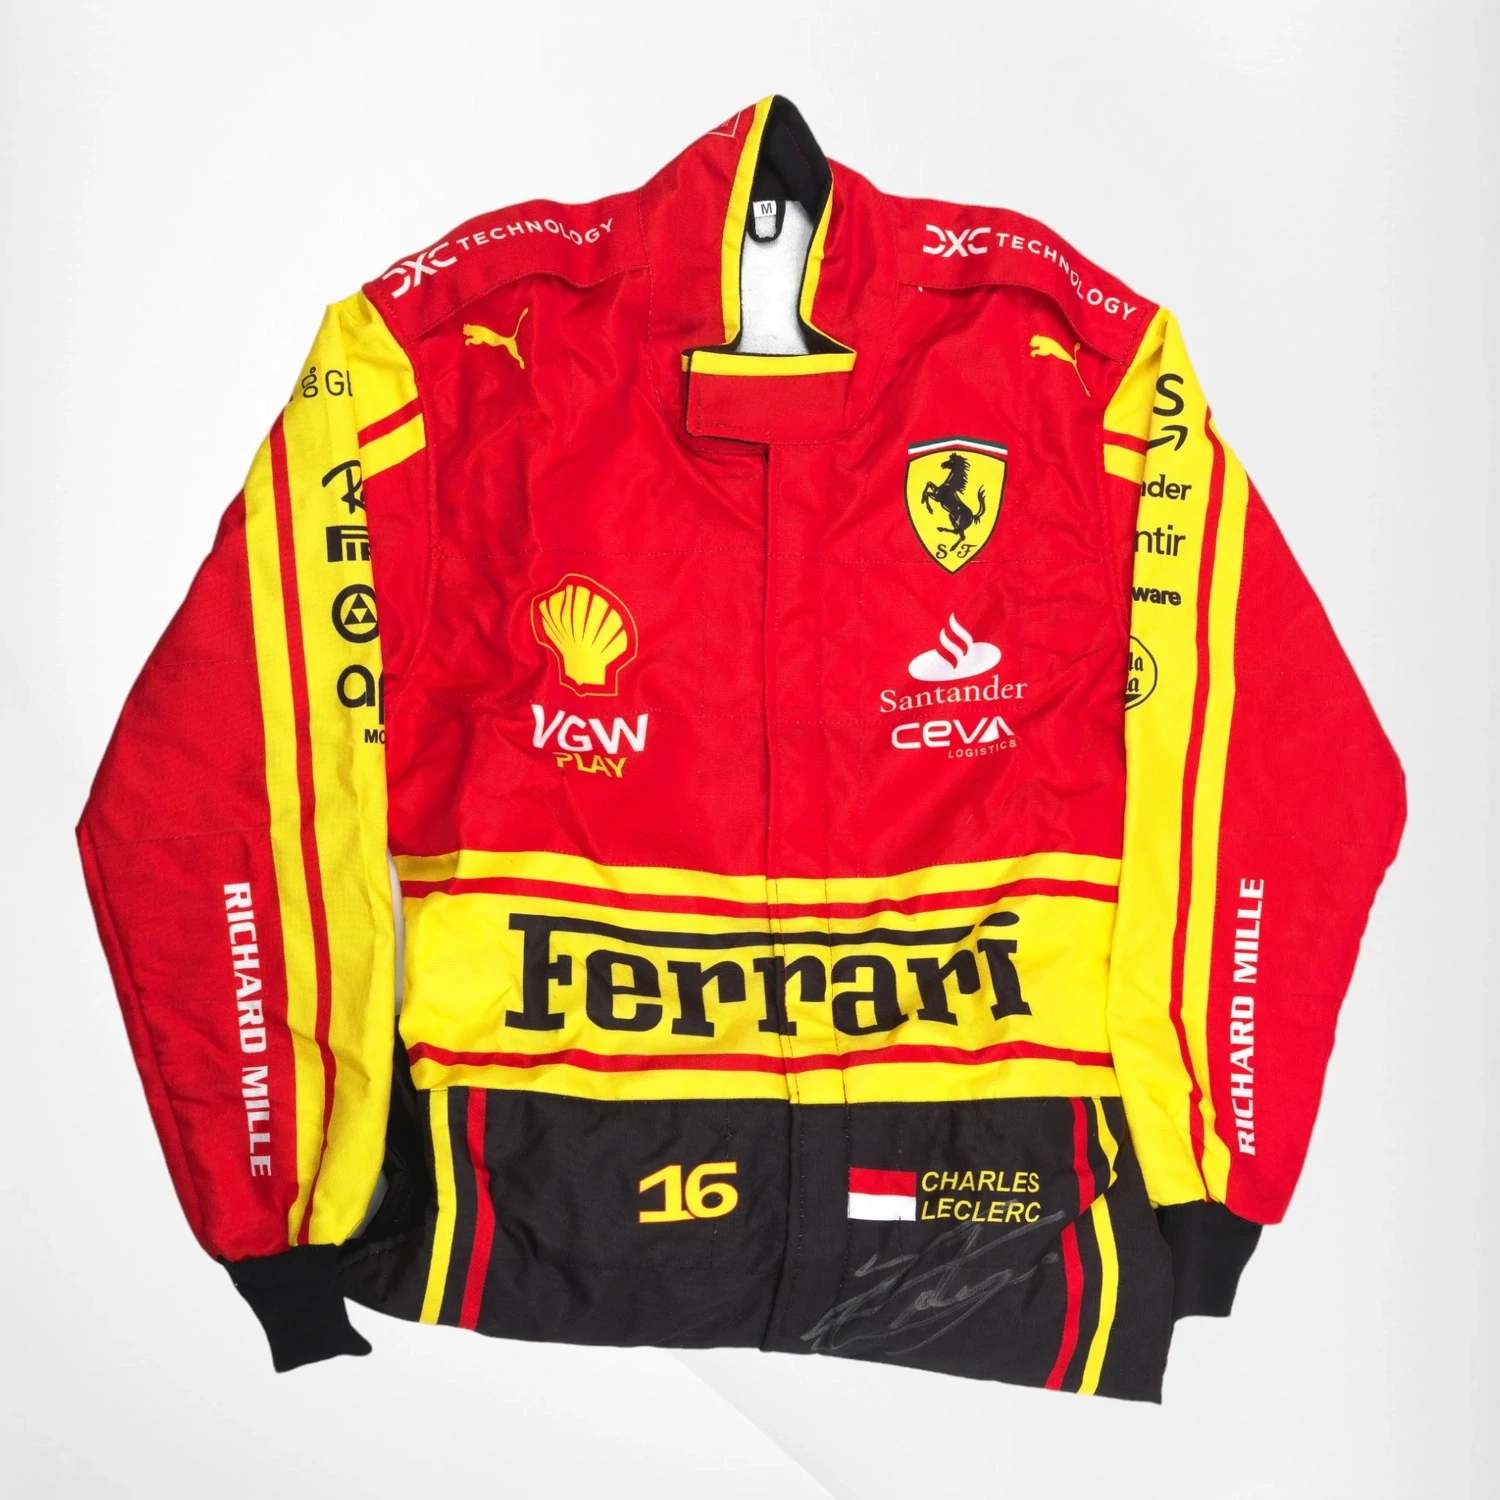 2023 Charles Leclerc signed Ferrari replica Race Suit - Monza GP